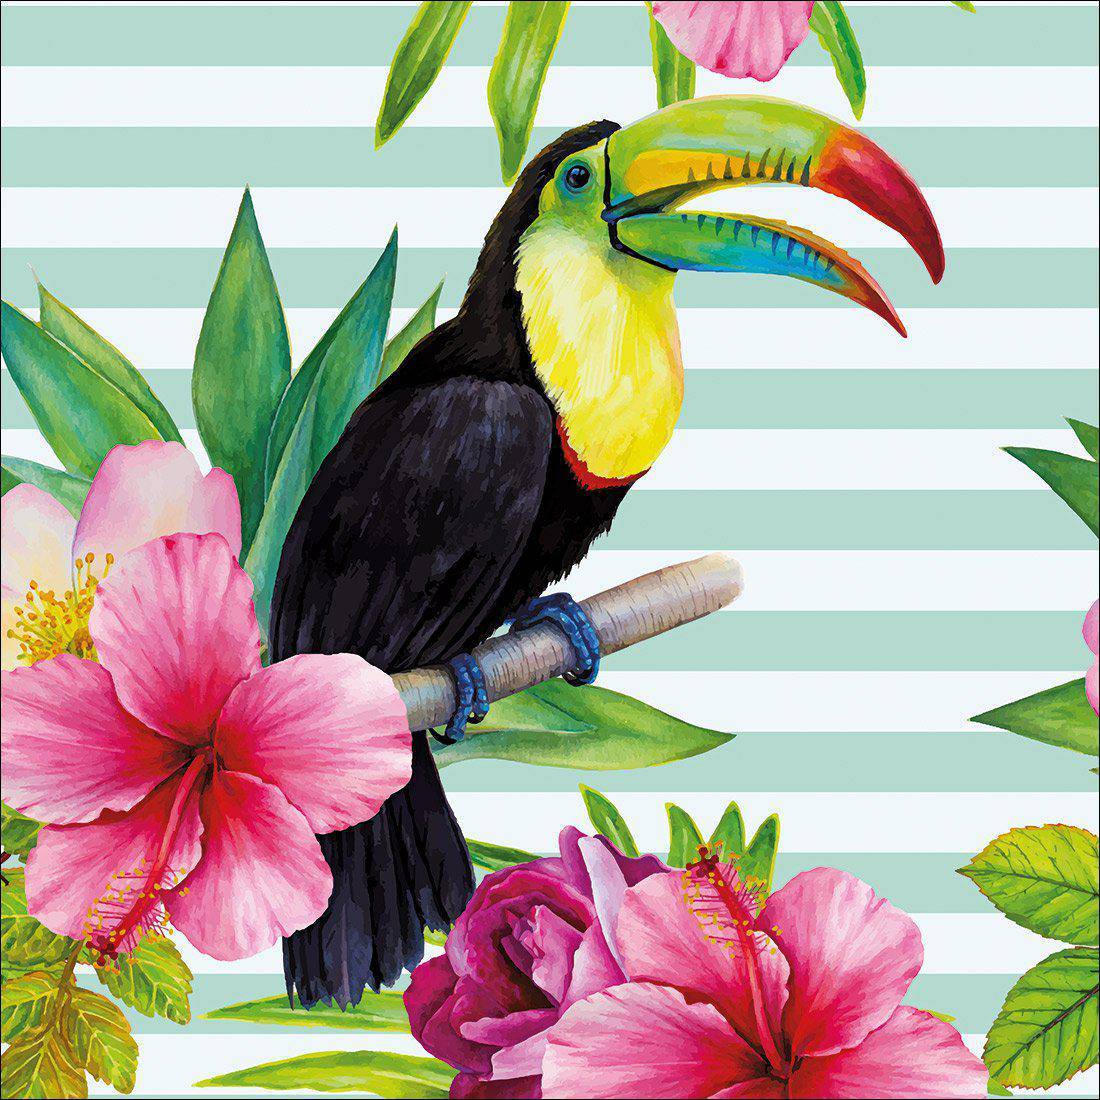 Hibiscus Toucan Canvas Art-Canvas-Wall Art Designs-30x30cm-Canvas - No Frame-Wall Art Designs